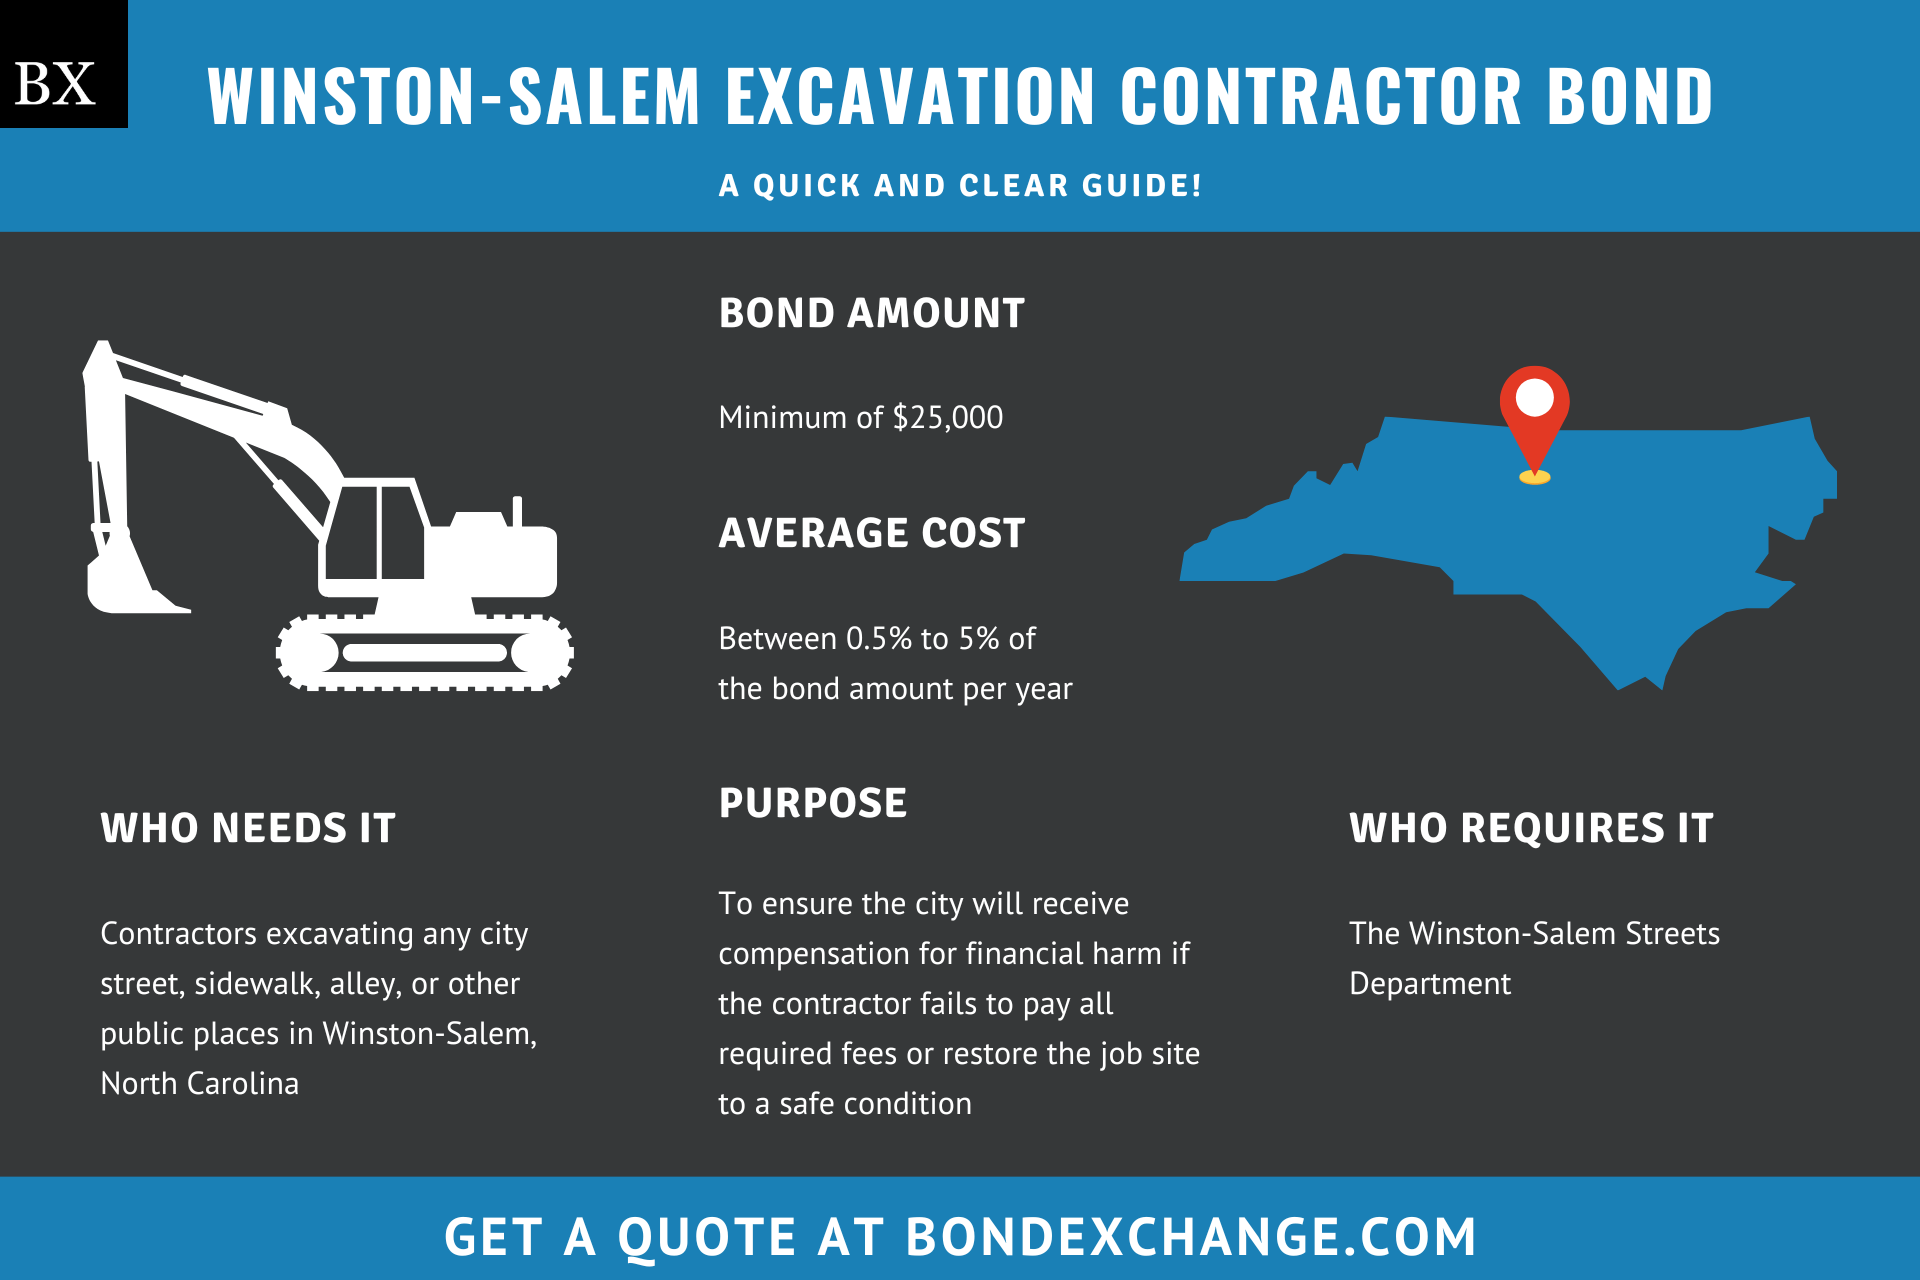 Winston-Salem Excavation Bond